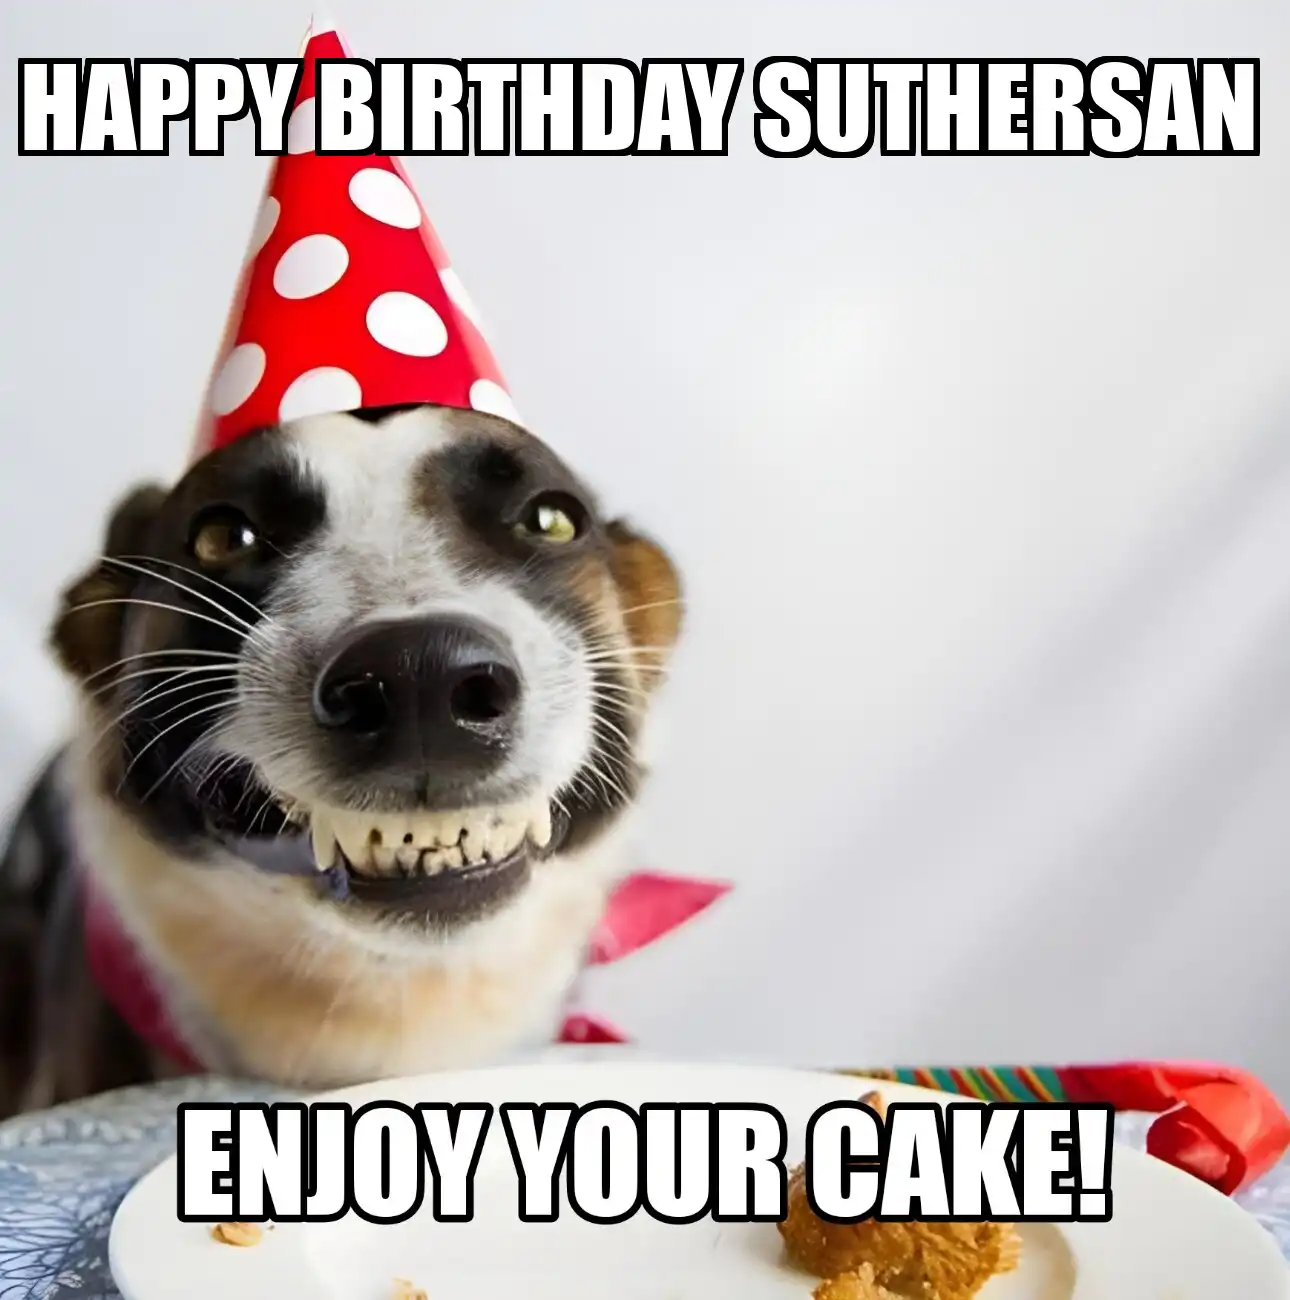 Happy Birthday Suthersan Enjoy Your Cake Dog Meme